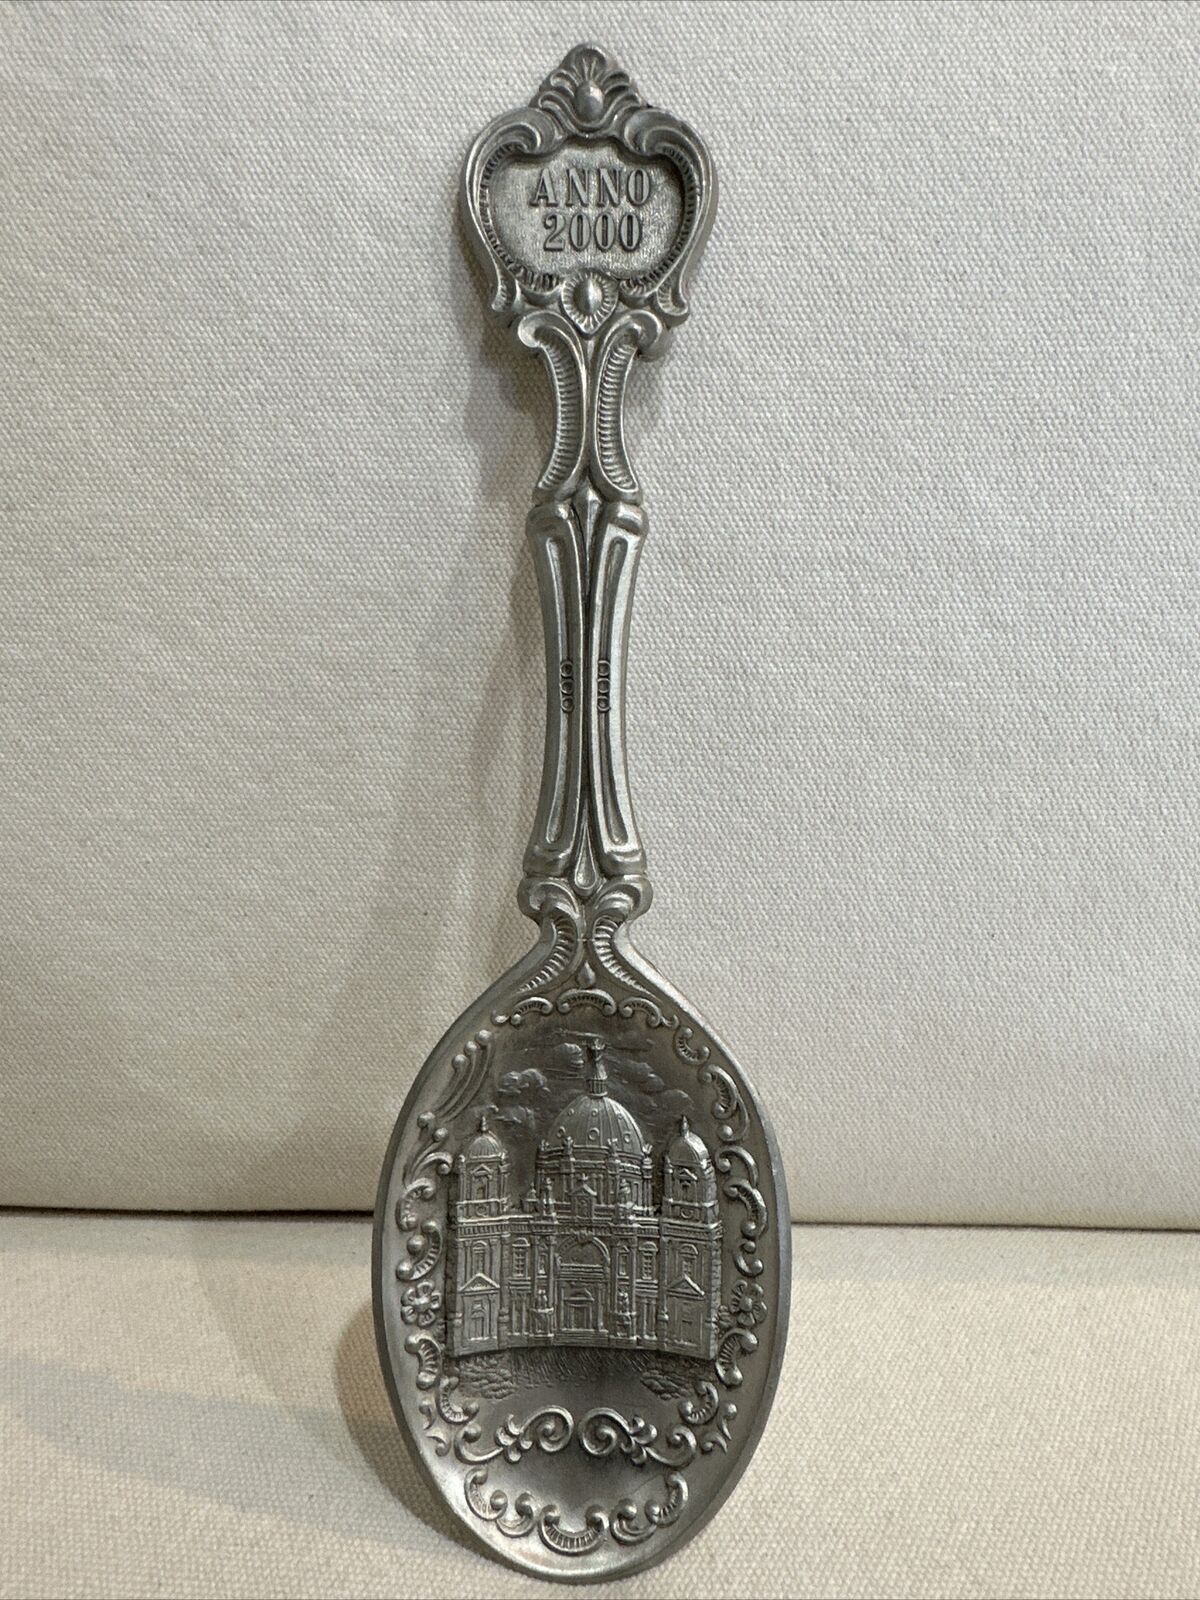 Vintage SKS Zinn Germany Pewter Souvenir Spoon Collectible Anno 2000 Dom Berlin